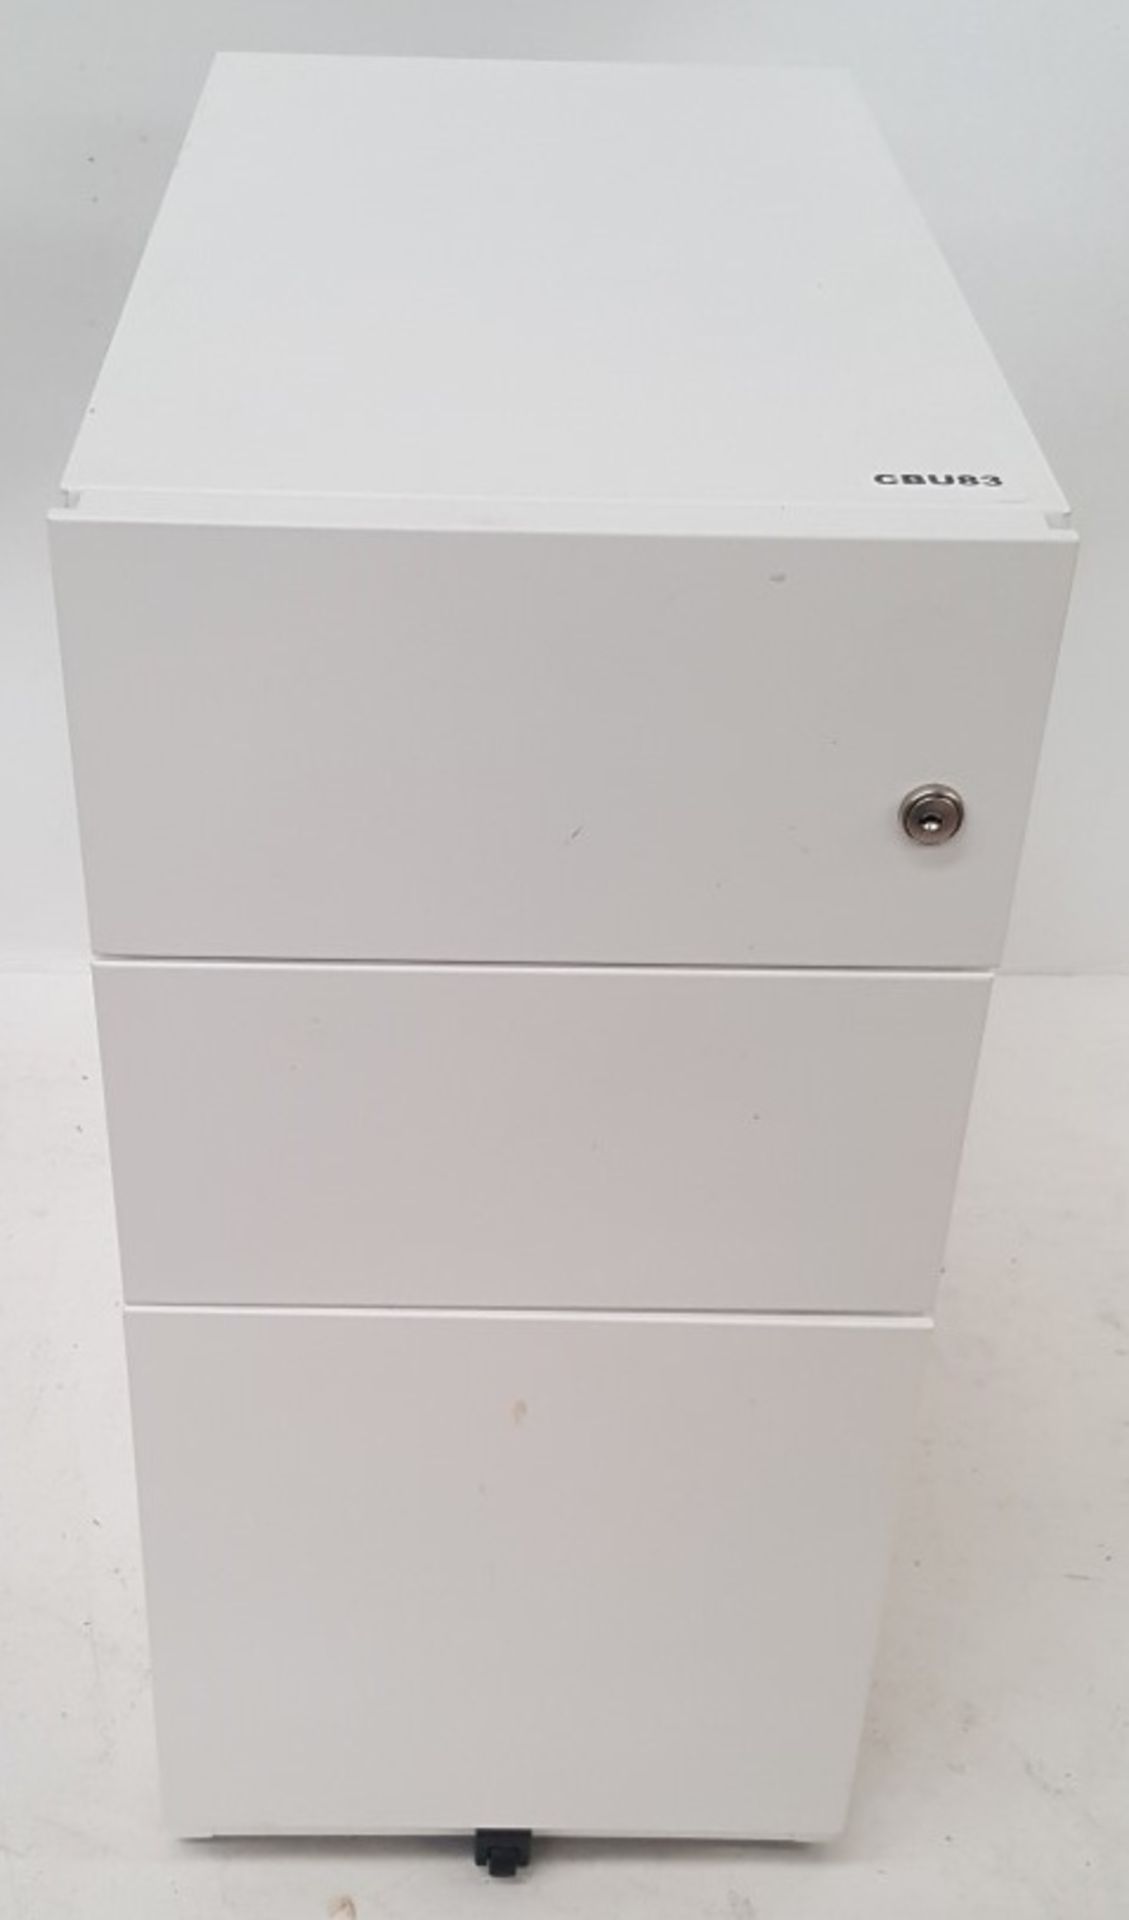 4 x Premium Metal Office 3-Drawer Pedestal In White - Dimensions: L56/W30/H64cm - Ref CBU83/1